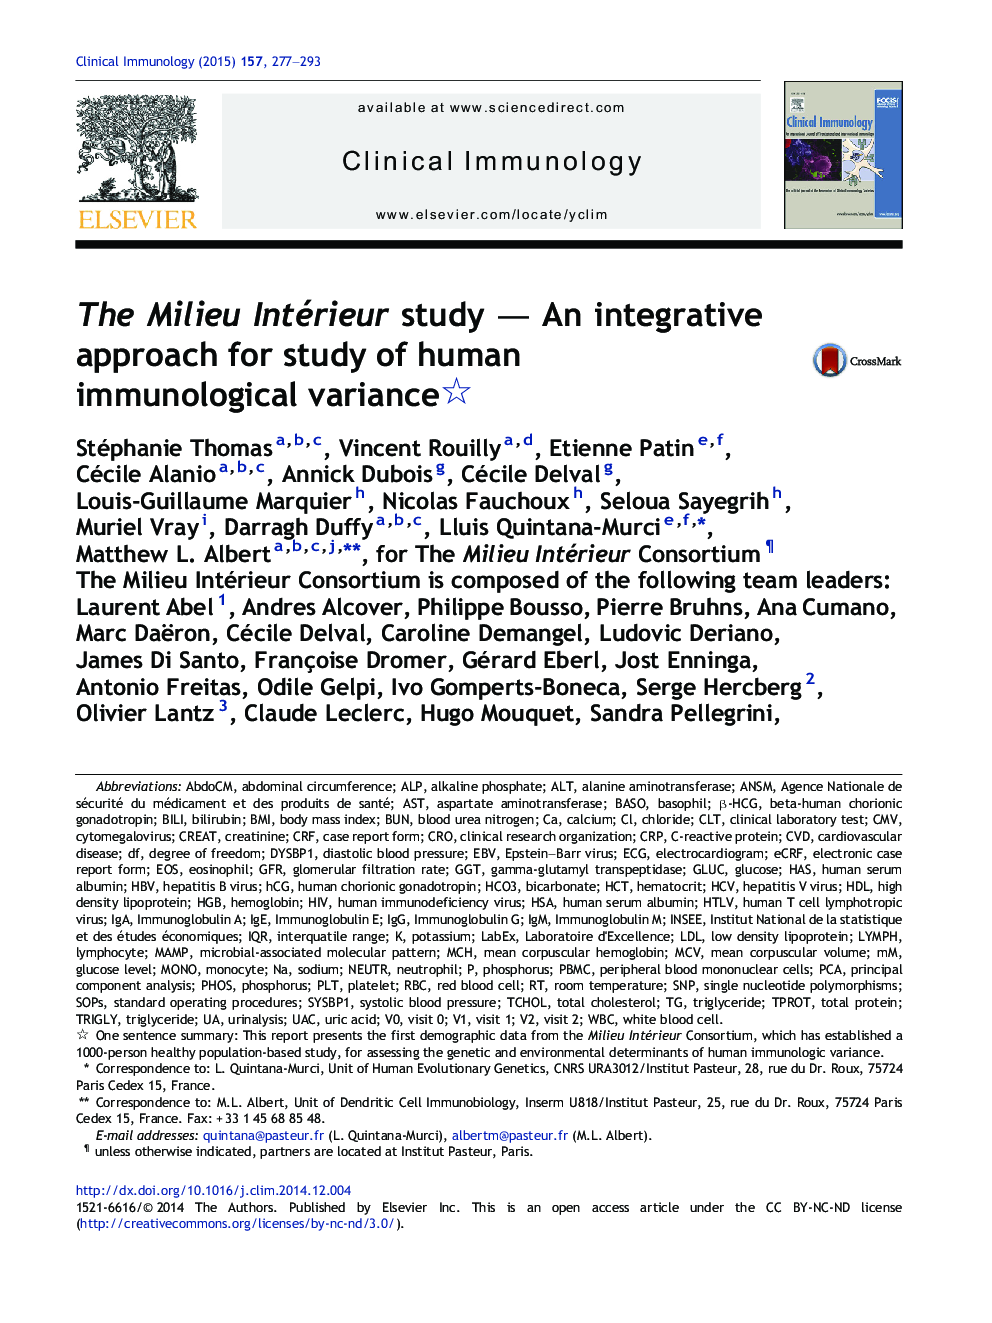 The Milieu Intérieur study - An integrative approach for study of human immunological variance